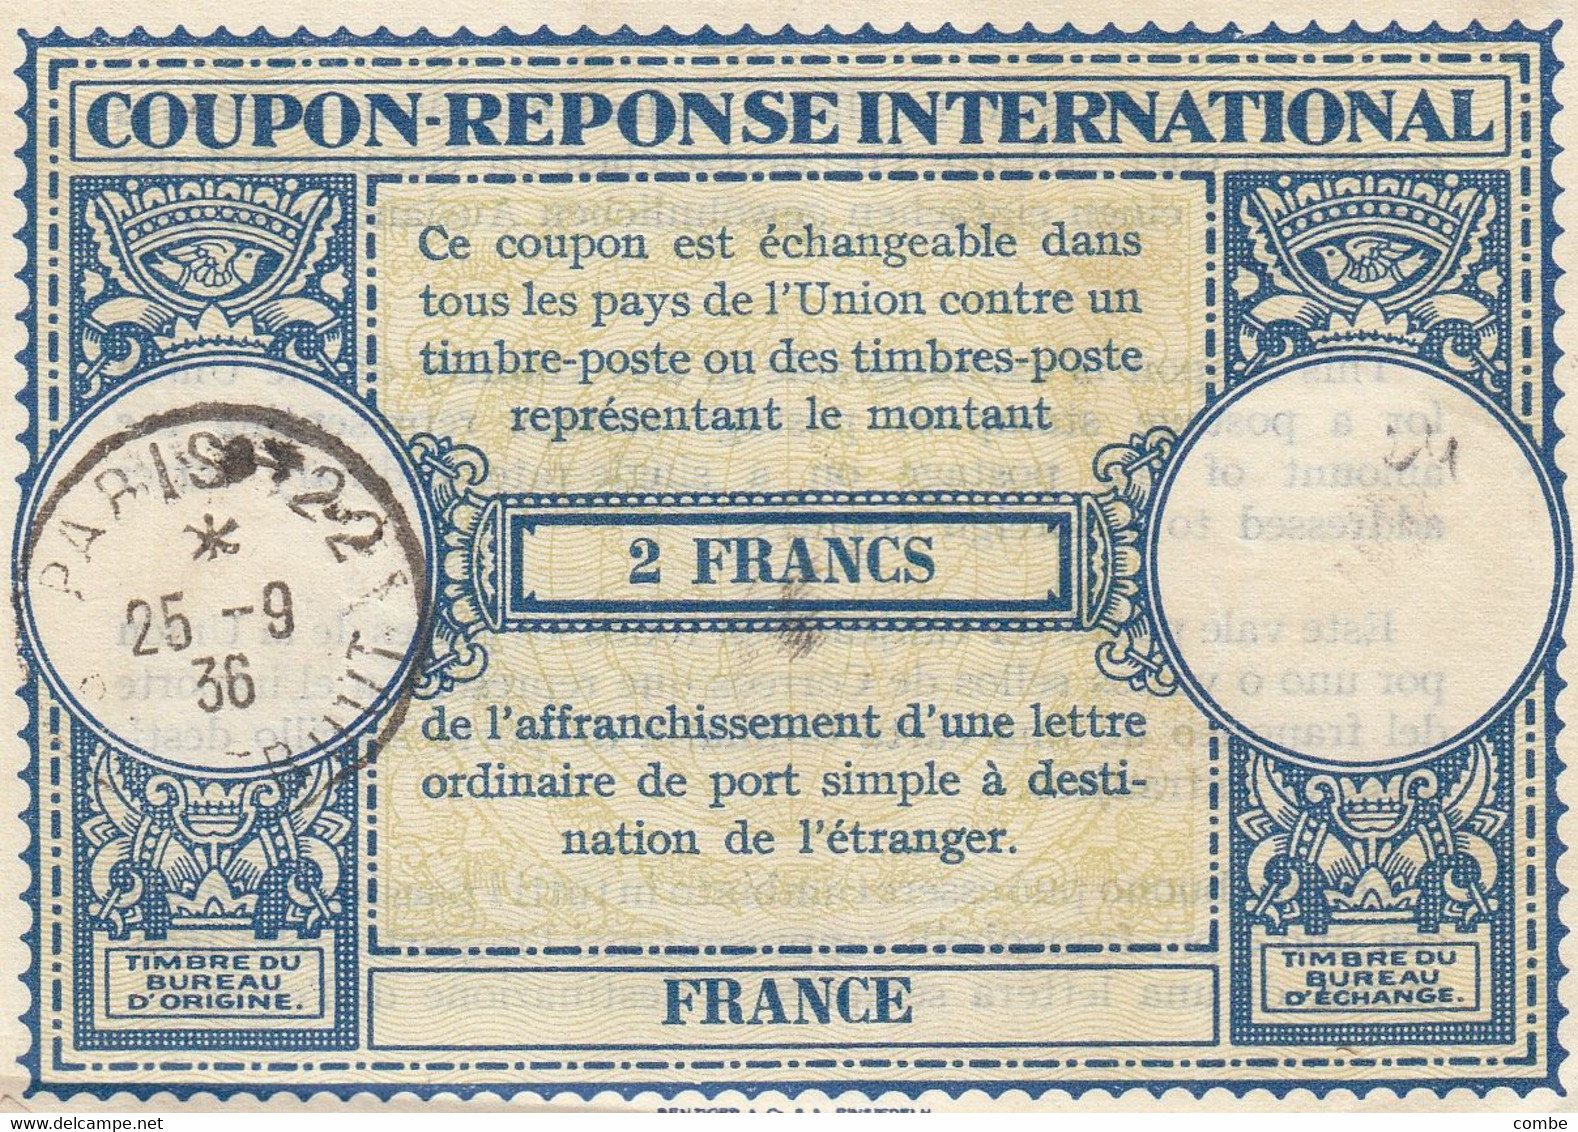 COUPON-REPONSE INTERNATIONAL. FRANCE. INTERNATIONAL REPLY. 2 FRANCS. PARIS 22 1936        /  2 - Antwoordbons